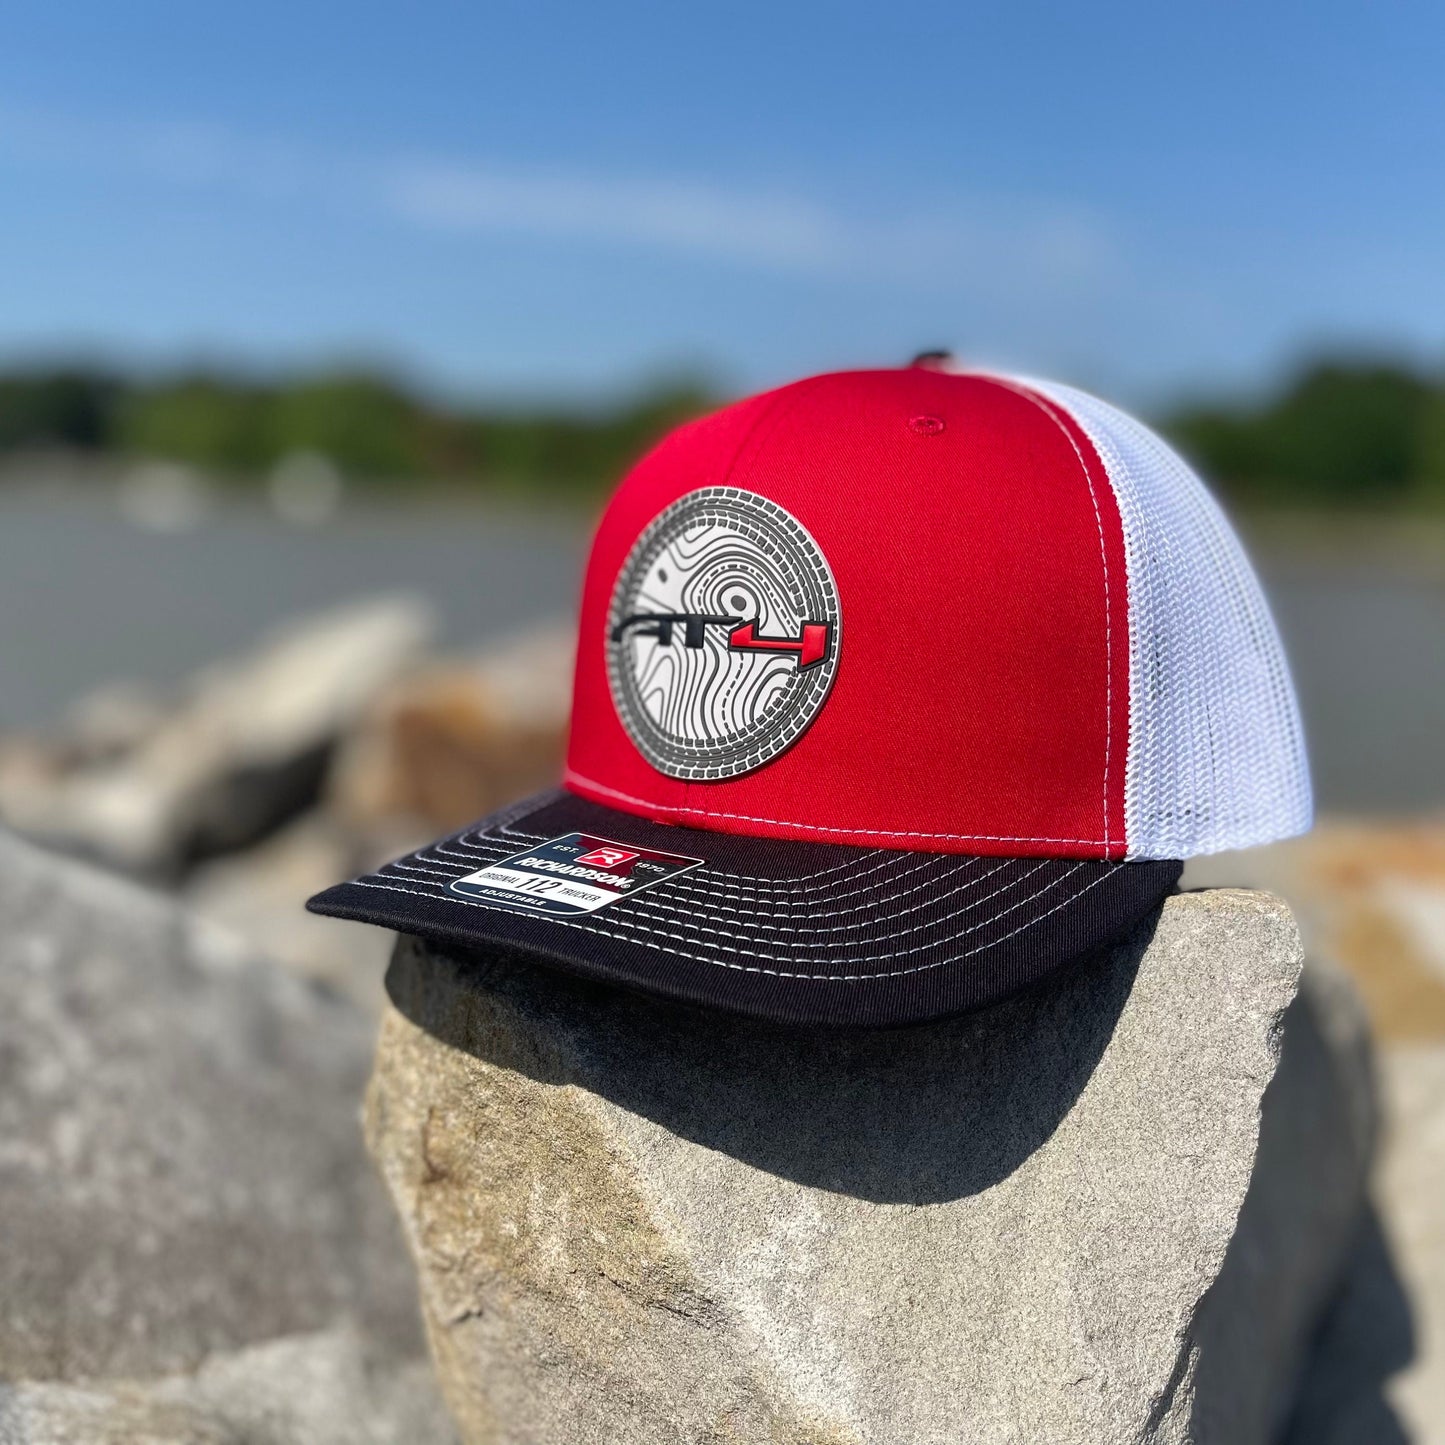 AT4 3D Topo Snapback Trucker Hat- Red/ White/ Black - Ten Gallon Hat Co.